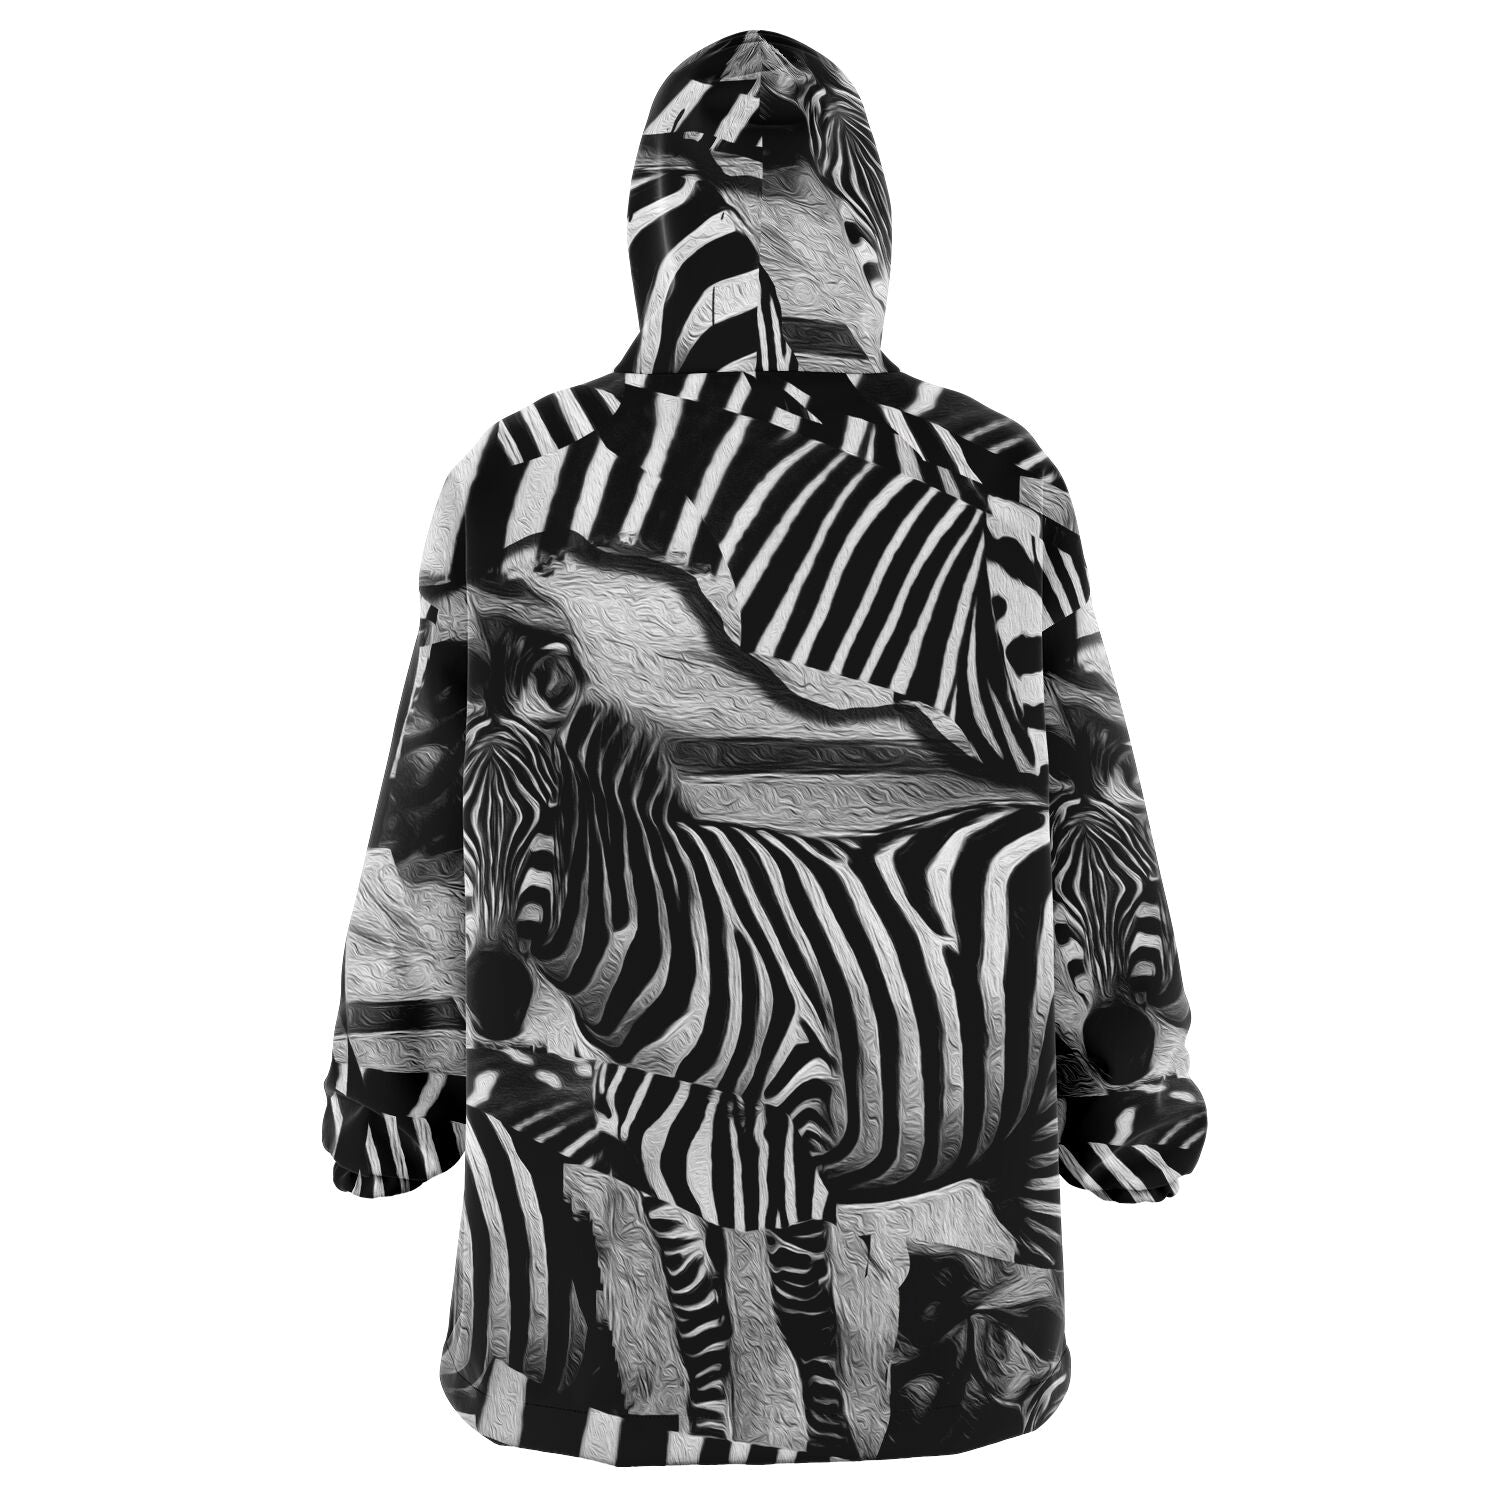 Zebra Artwork Snug Hoodie Gift Idea HOO-DESIGN.SHOP